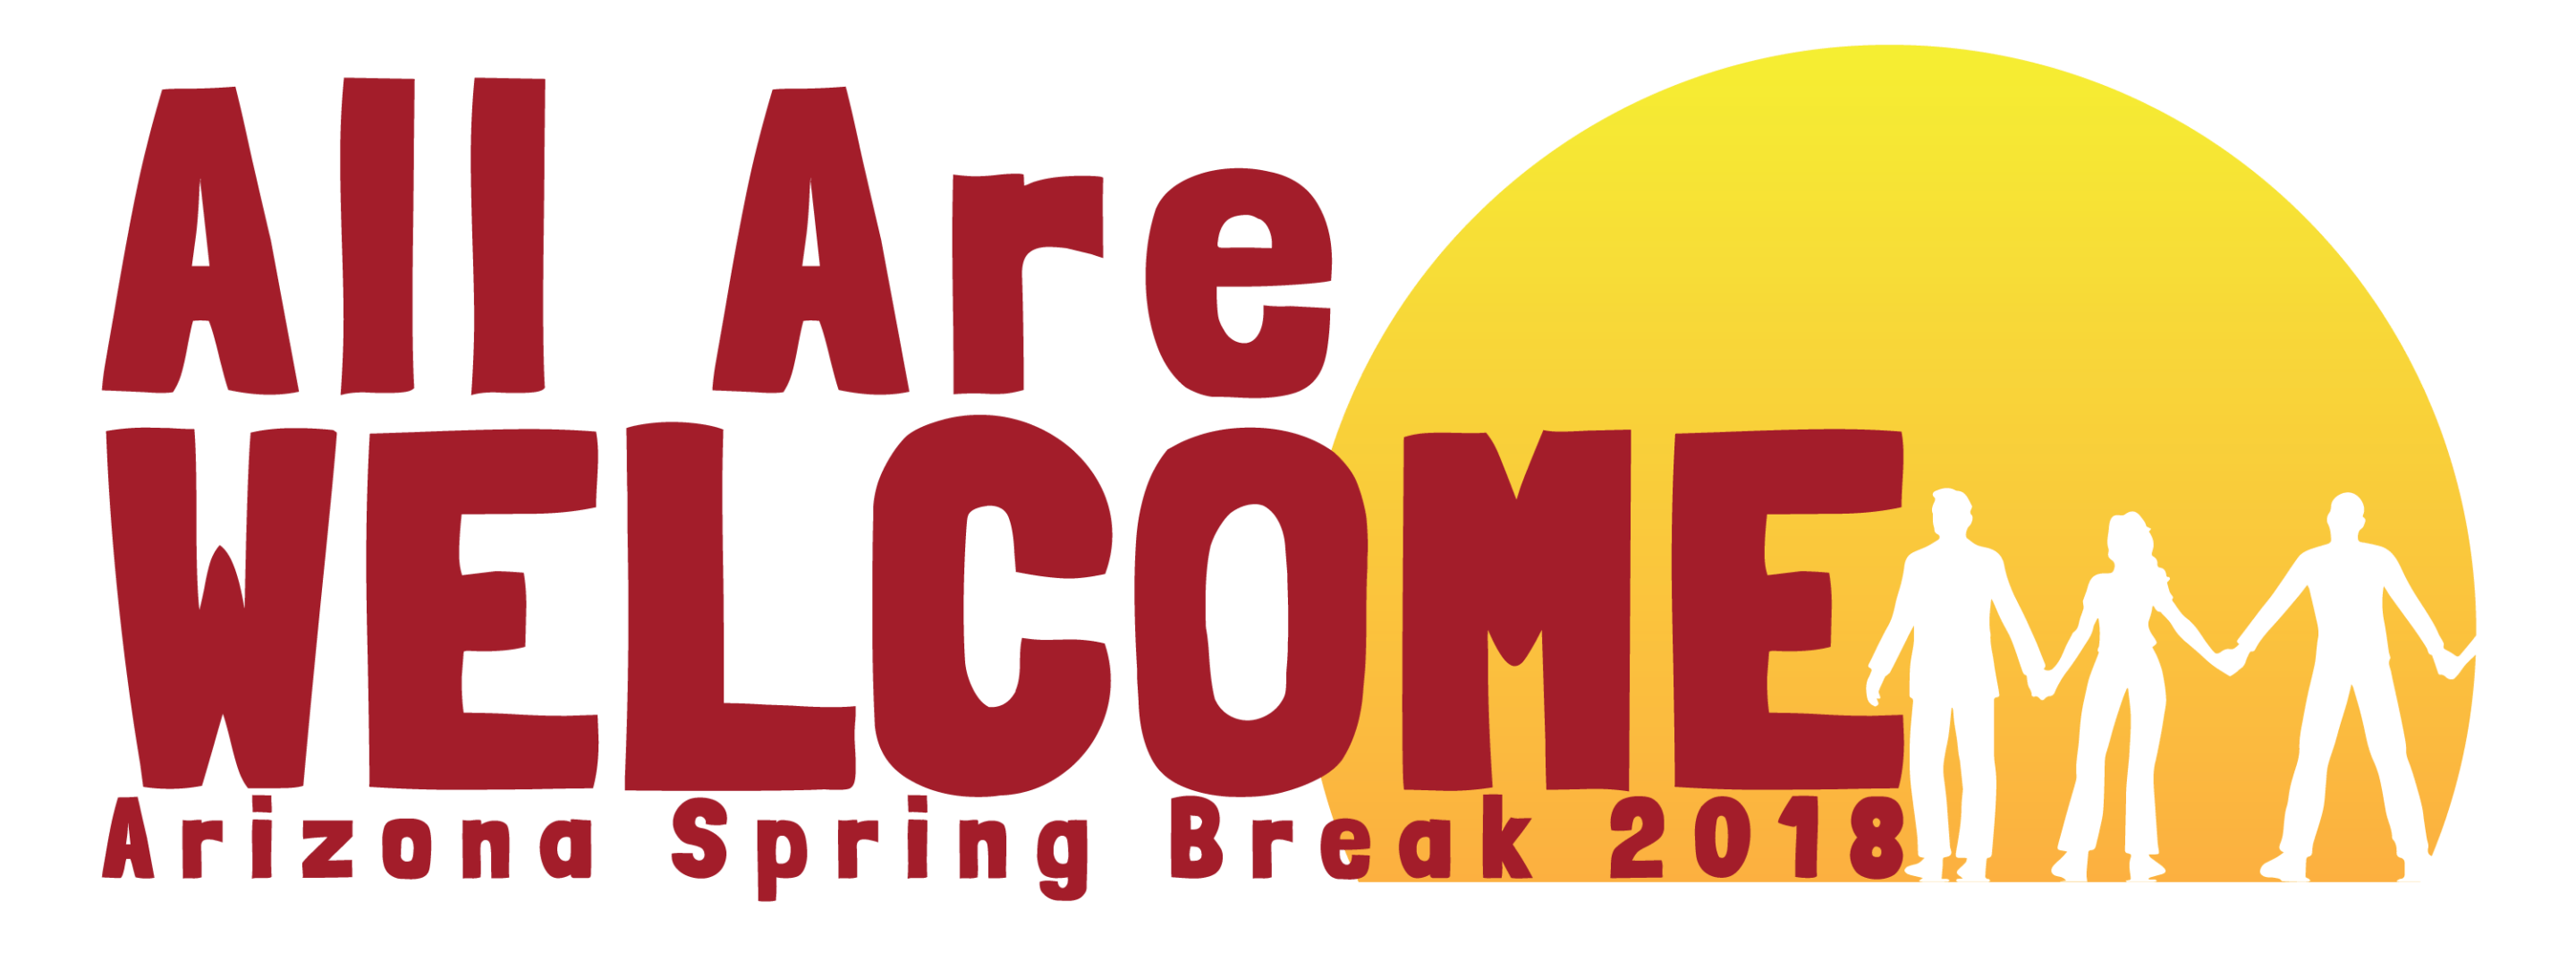 Spring Google Logo - AZ Spring Break 2018 & Vector Files Spring Break 2018